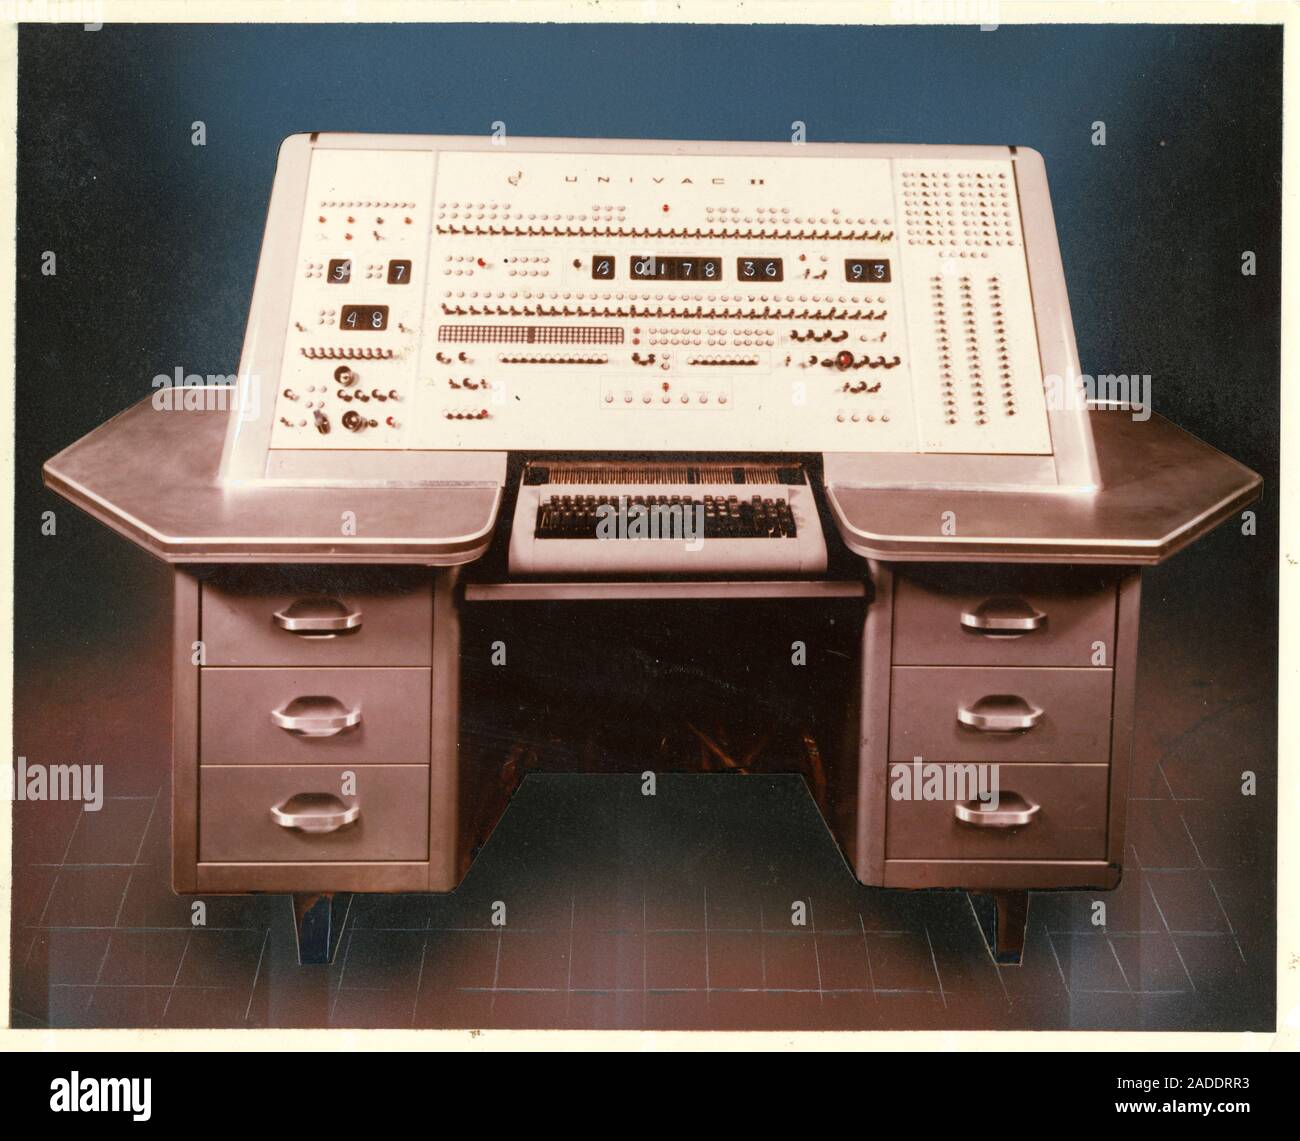 Univac UNIVAC 1100/2200